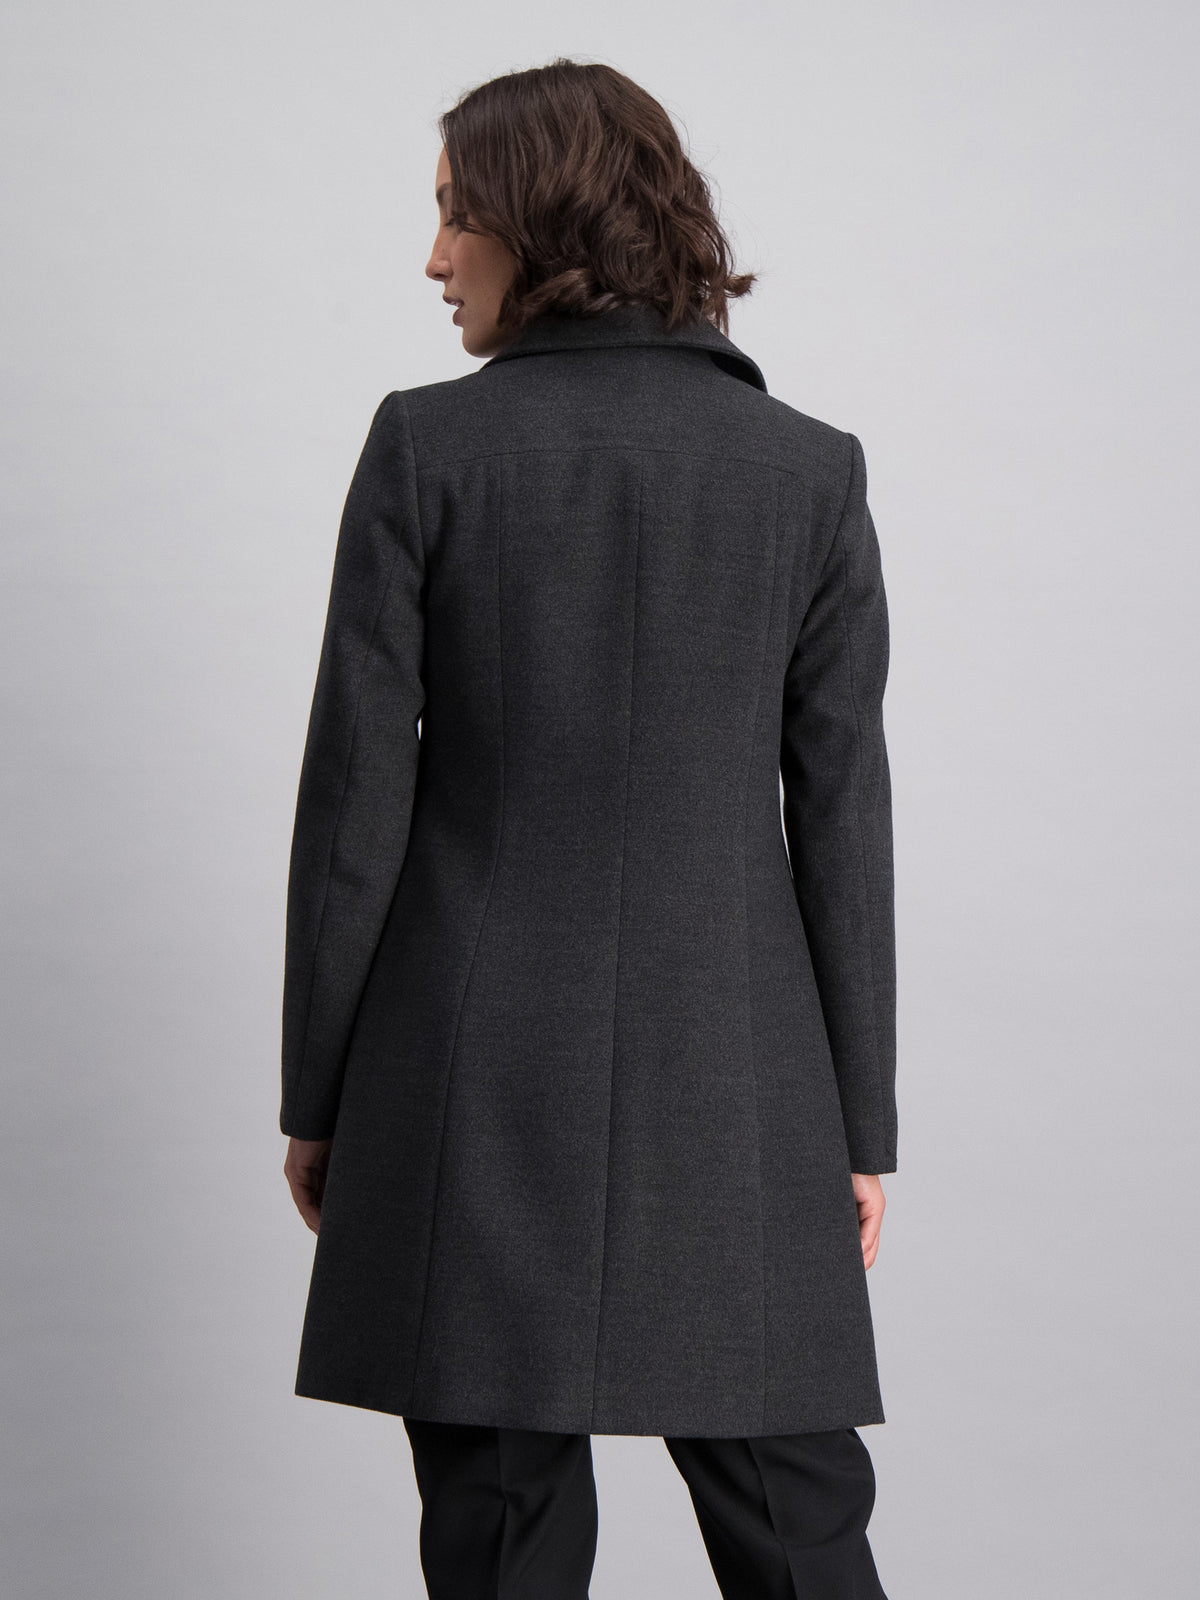 Lynn classic melton coat - charcoal